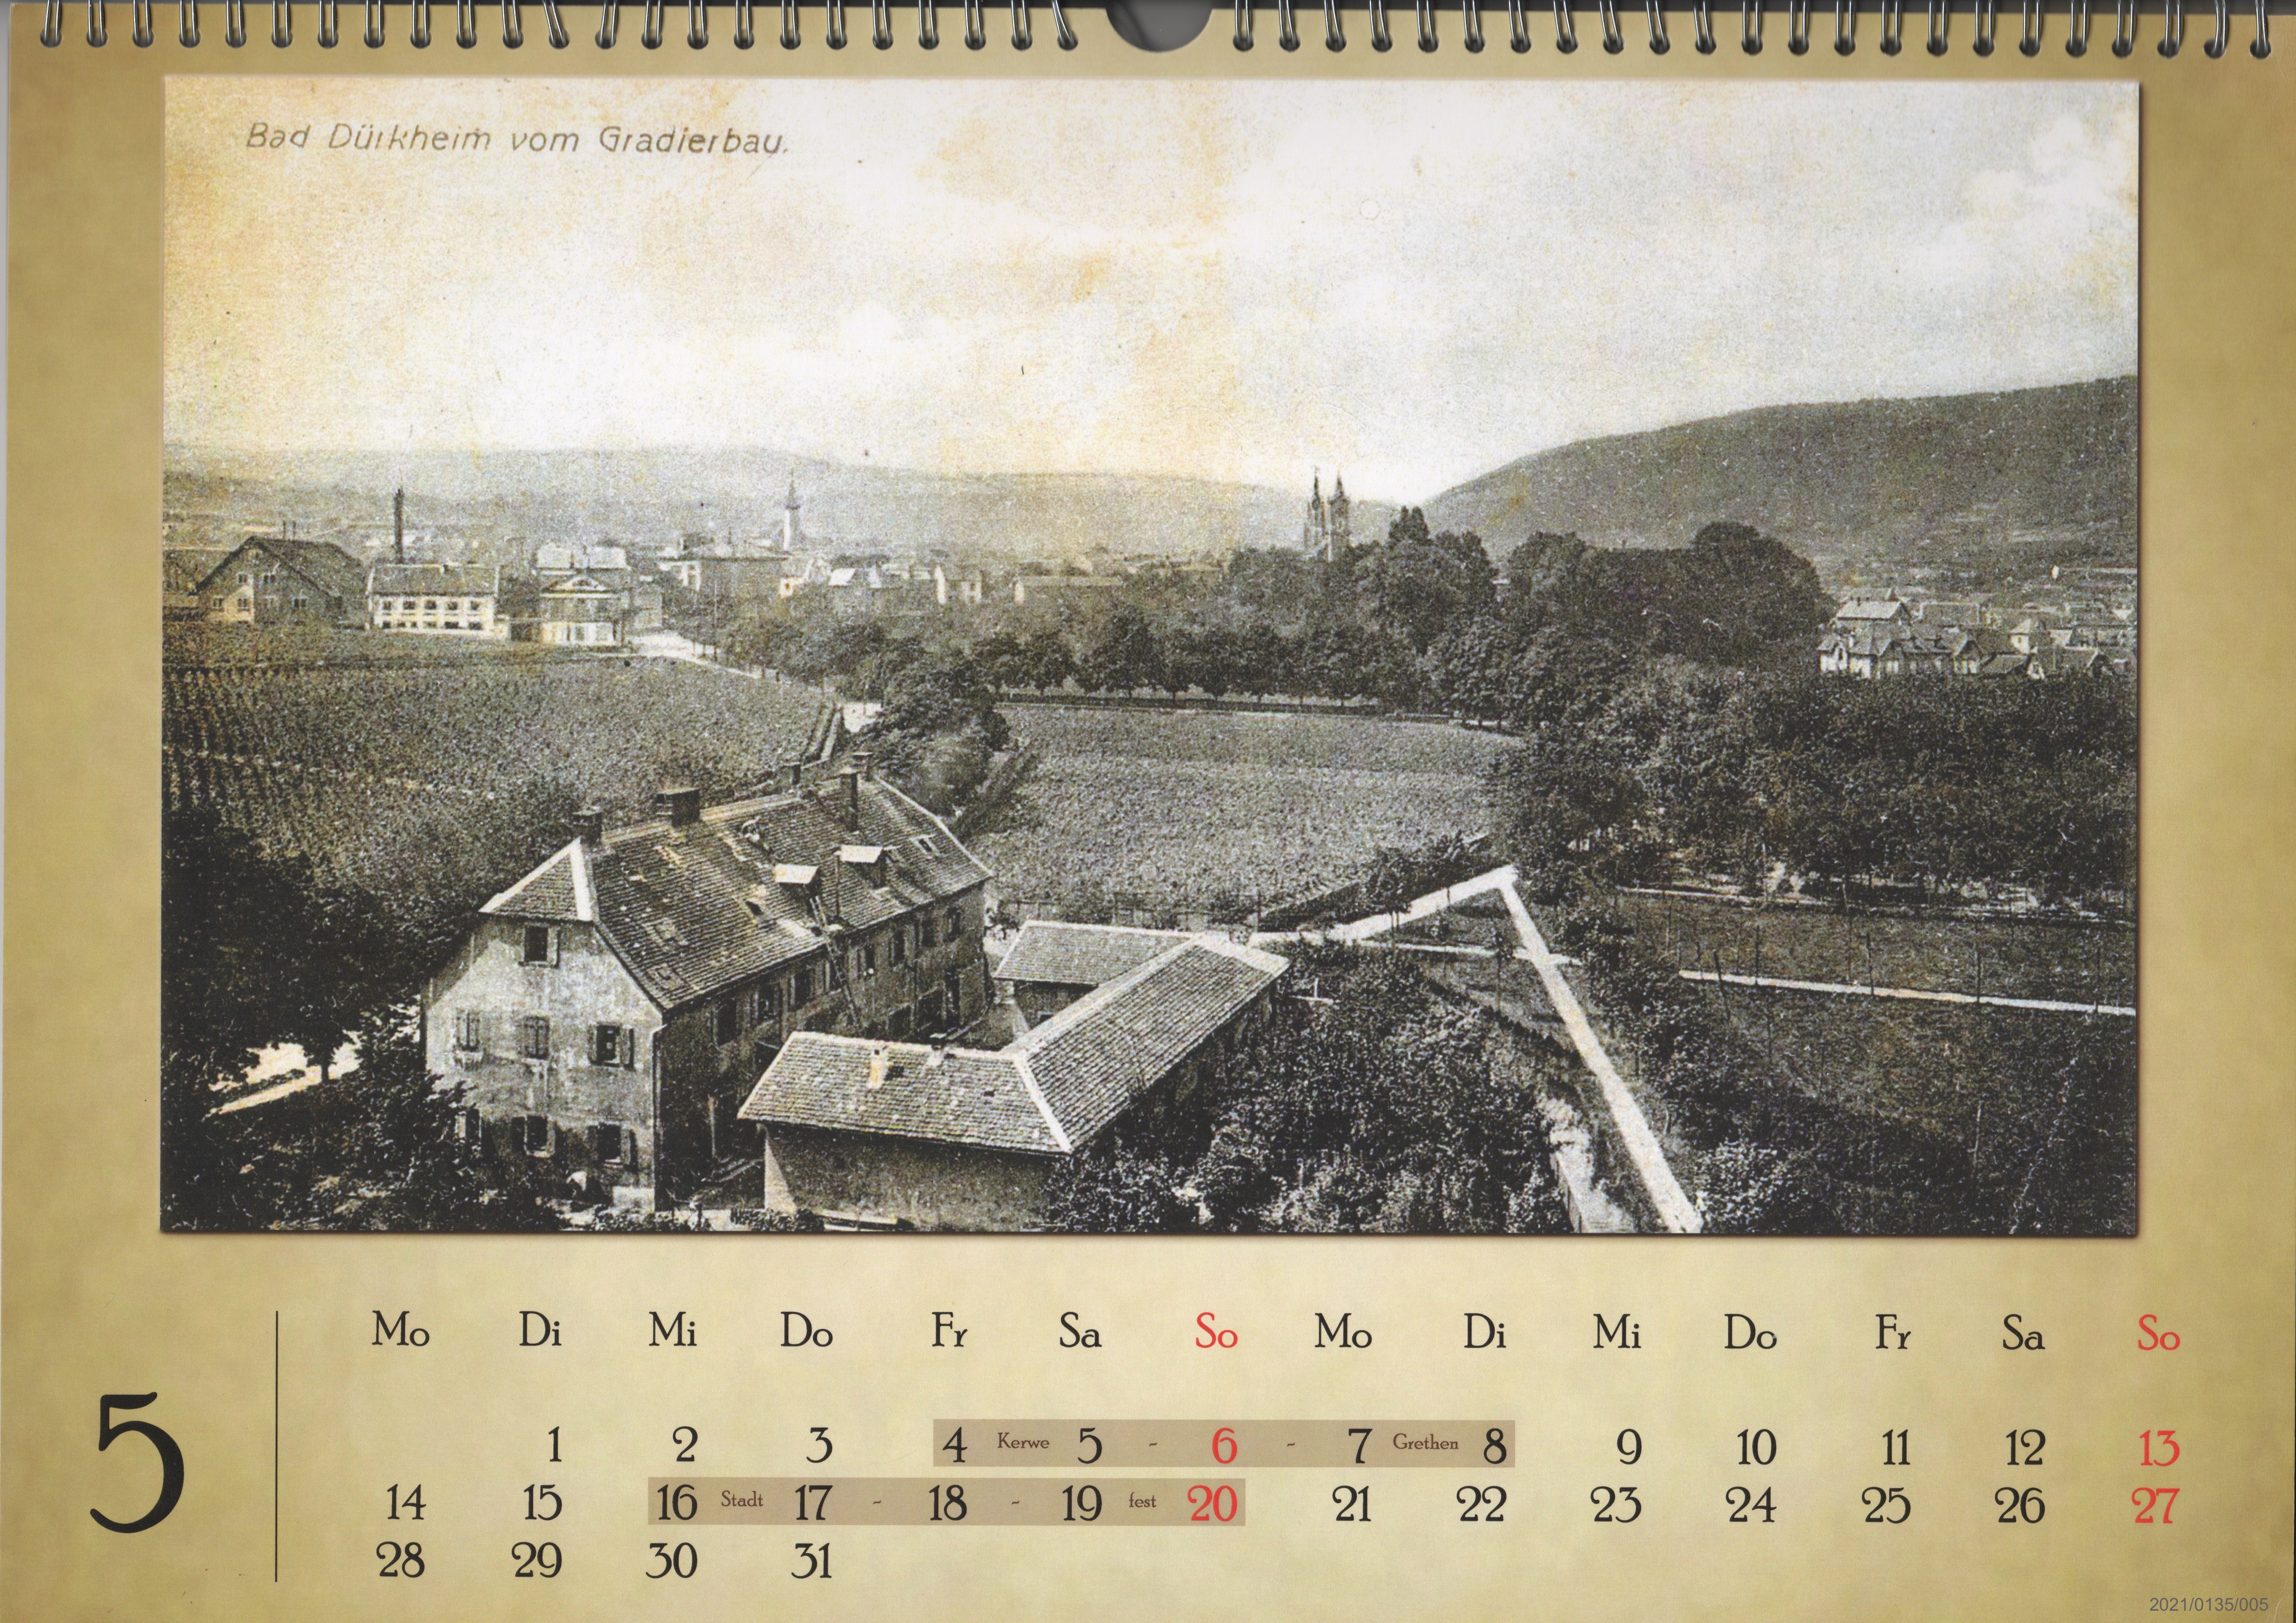 Unser Gradierbau Kalender 2012: Monat Mai (Museumsgesellschaft Bad Dürkheim e. V. CC BY-NC-SA)